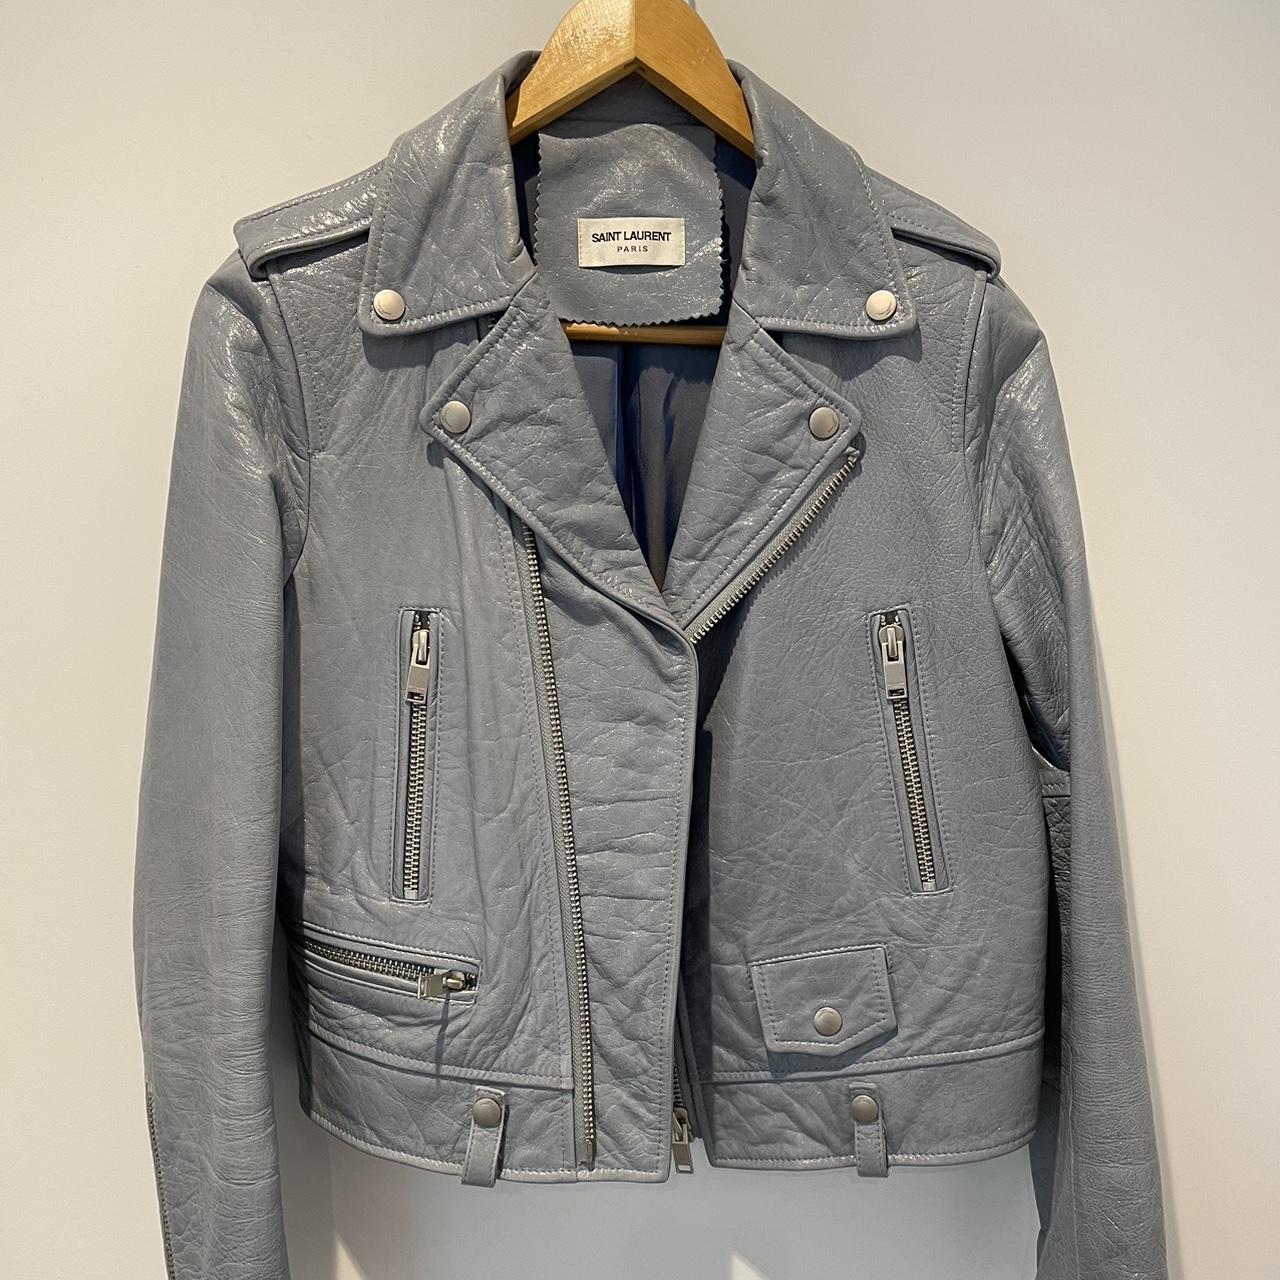 Stunning Saint Laurent Leather Jacket Perfect to go... - Depop